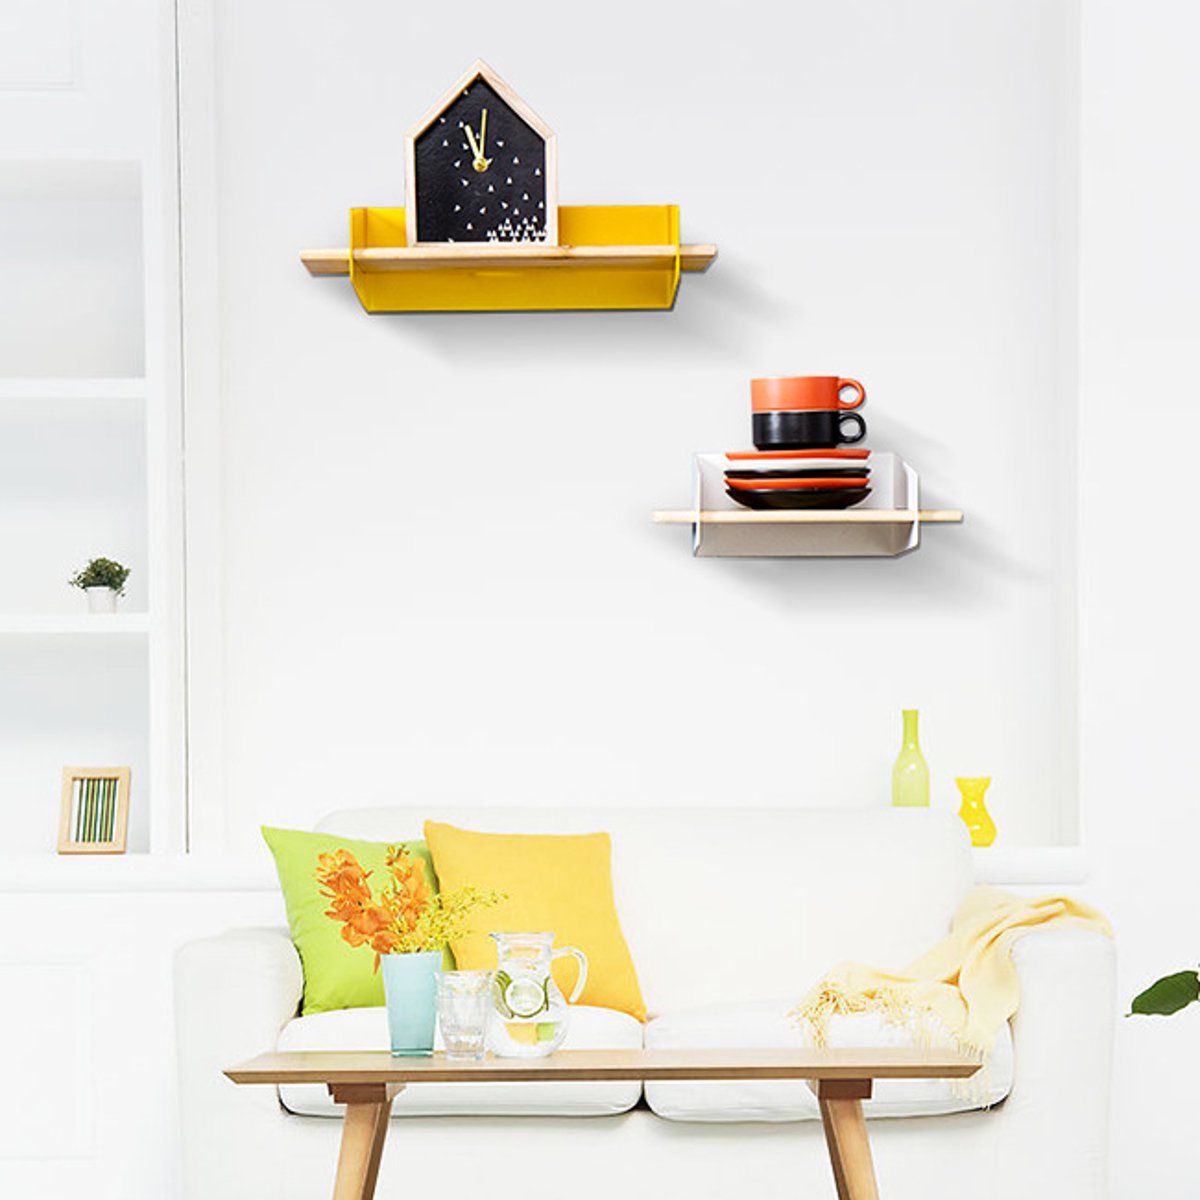 5-Color-20CM-Floating-Wall-Mounted-Shelf-Hanging-Holder-Storage-Iron-Wood-Display-Bookshelf-Bracket-1384376-7